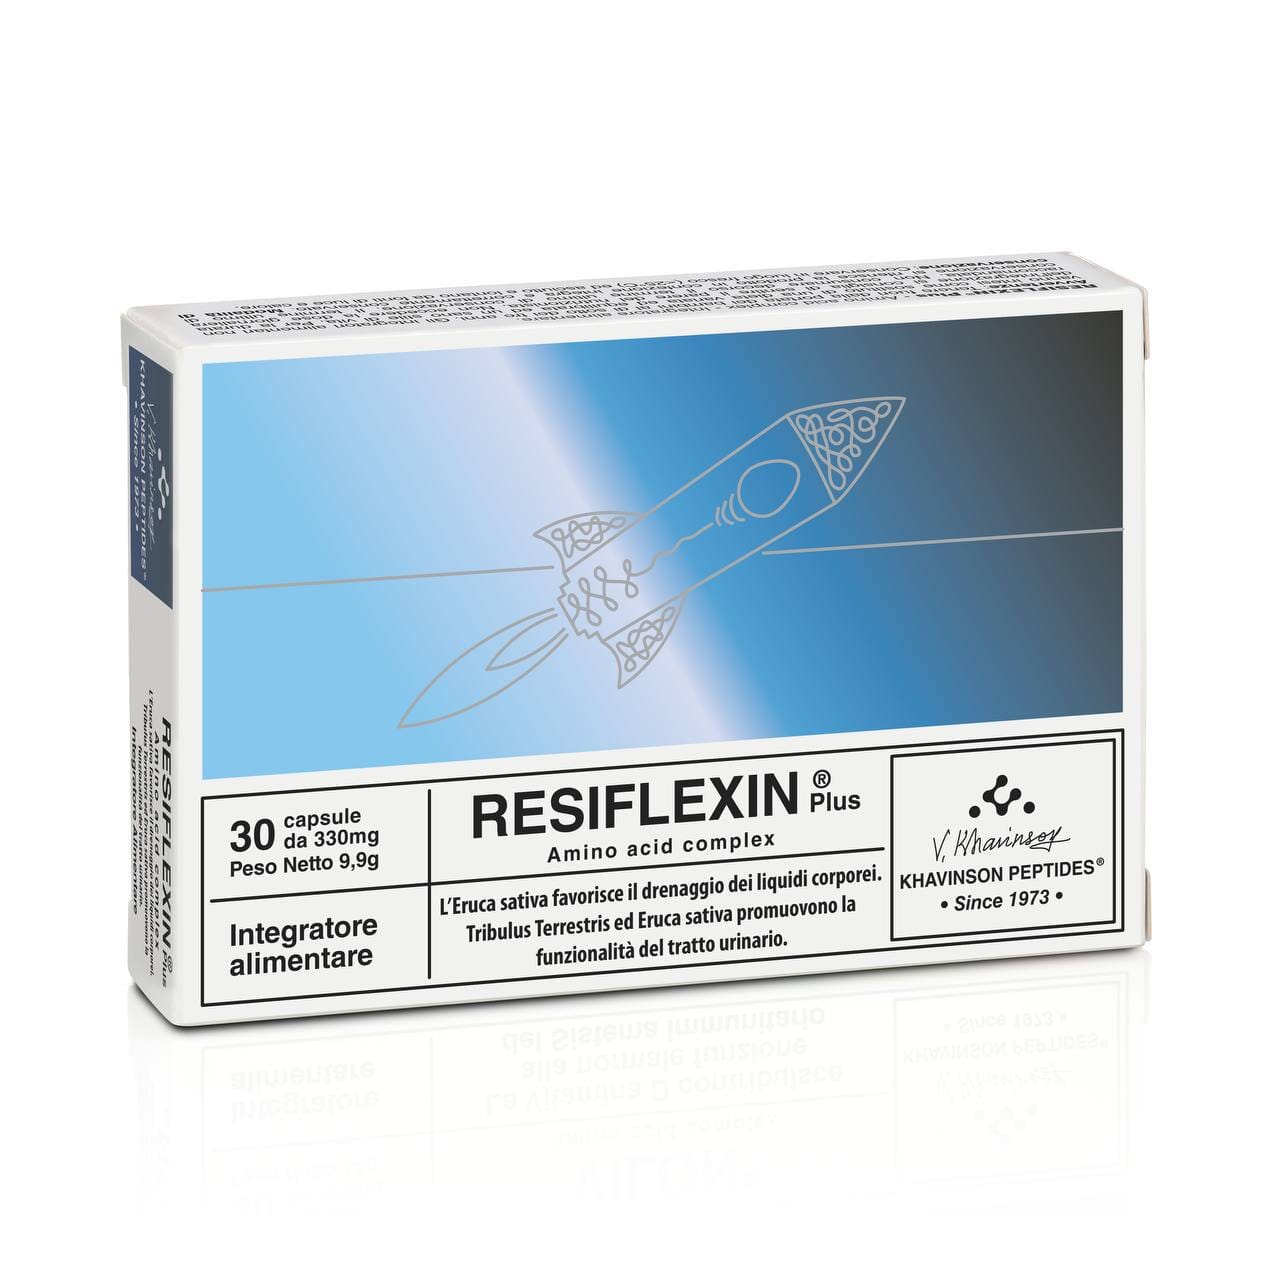 RESIFLEXIN®Plus Male Reproductive System Synthetic Peptide Bioregulators - 30 Capsules